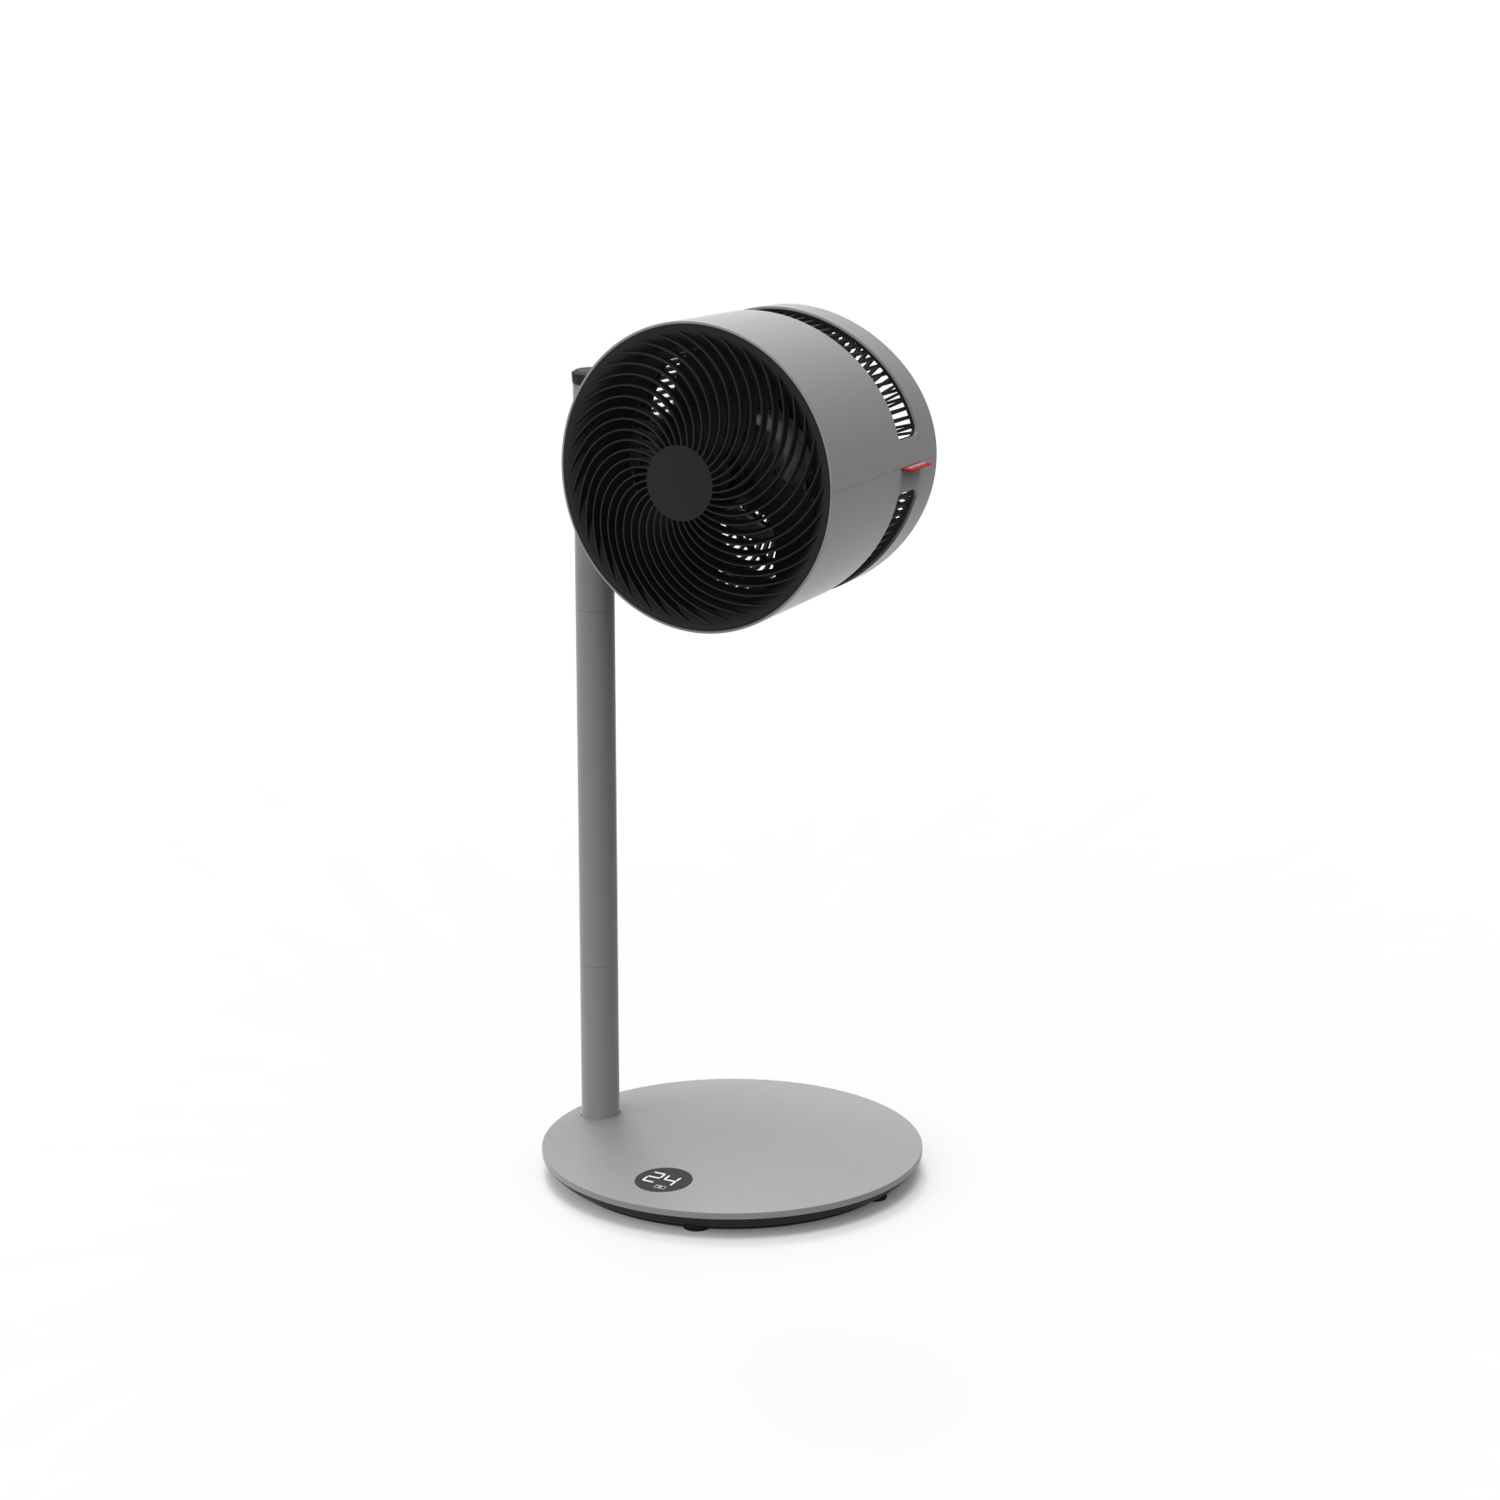 Digital Freestanding Pedestal Floor Fan with Smart Bluetooth App Control BONECO Air Shower Fan F225 Grey Adjustable 2 in 1 Direct or Indirect Cooling Unit Stylish Modern Swiss Design 